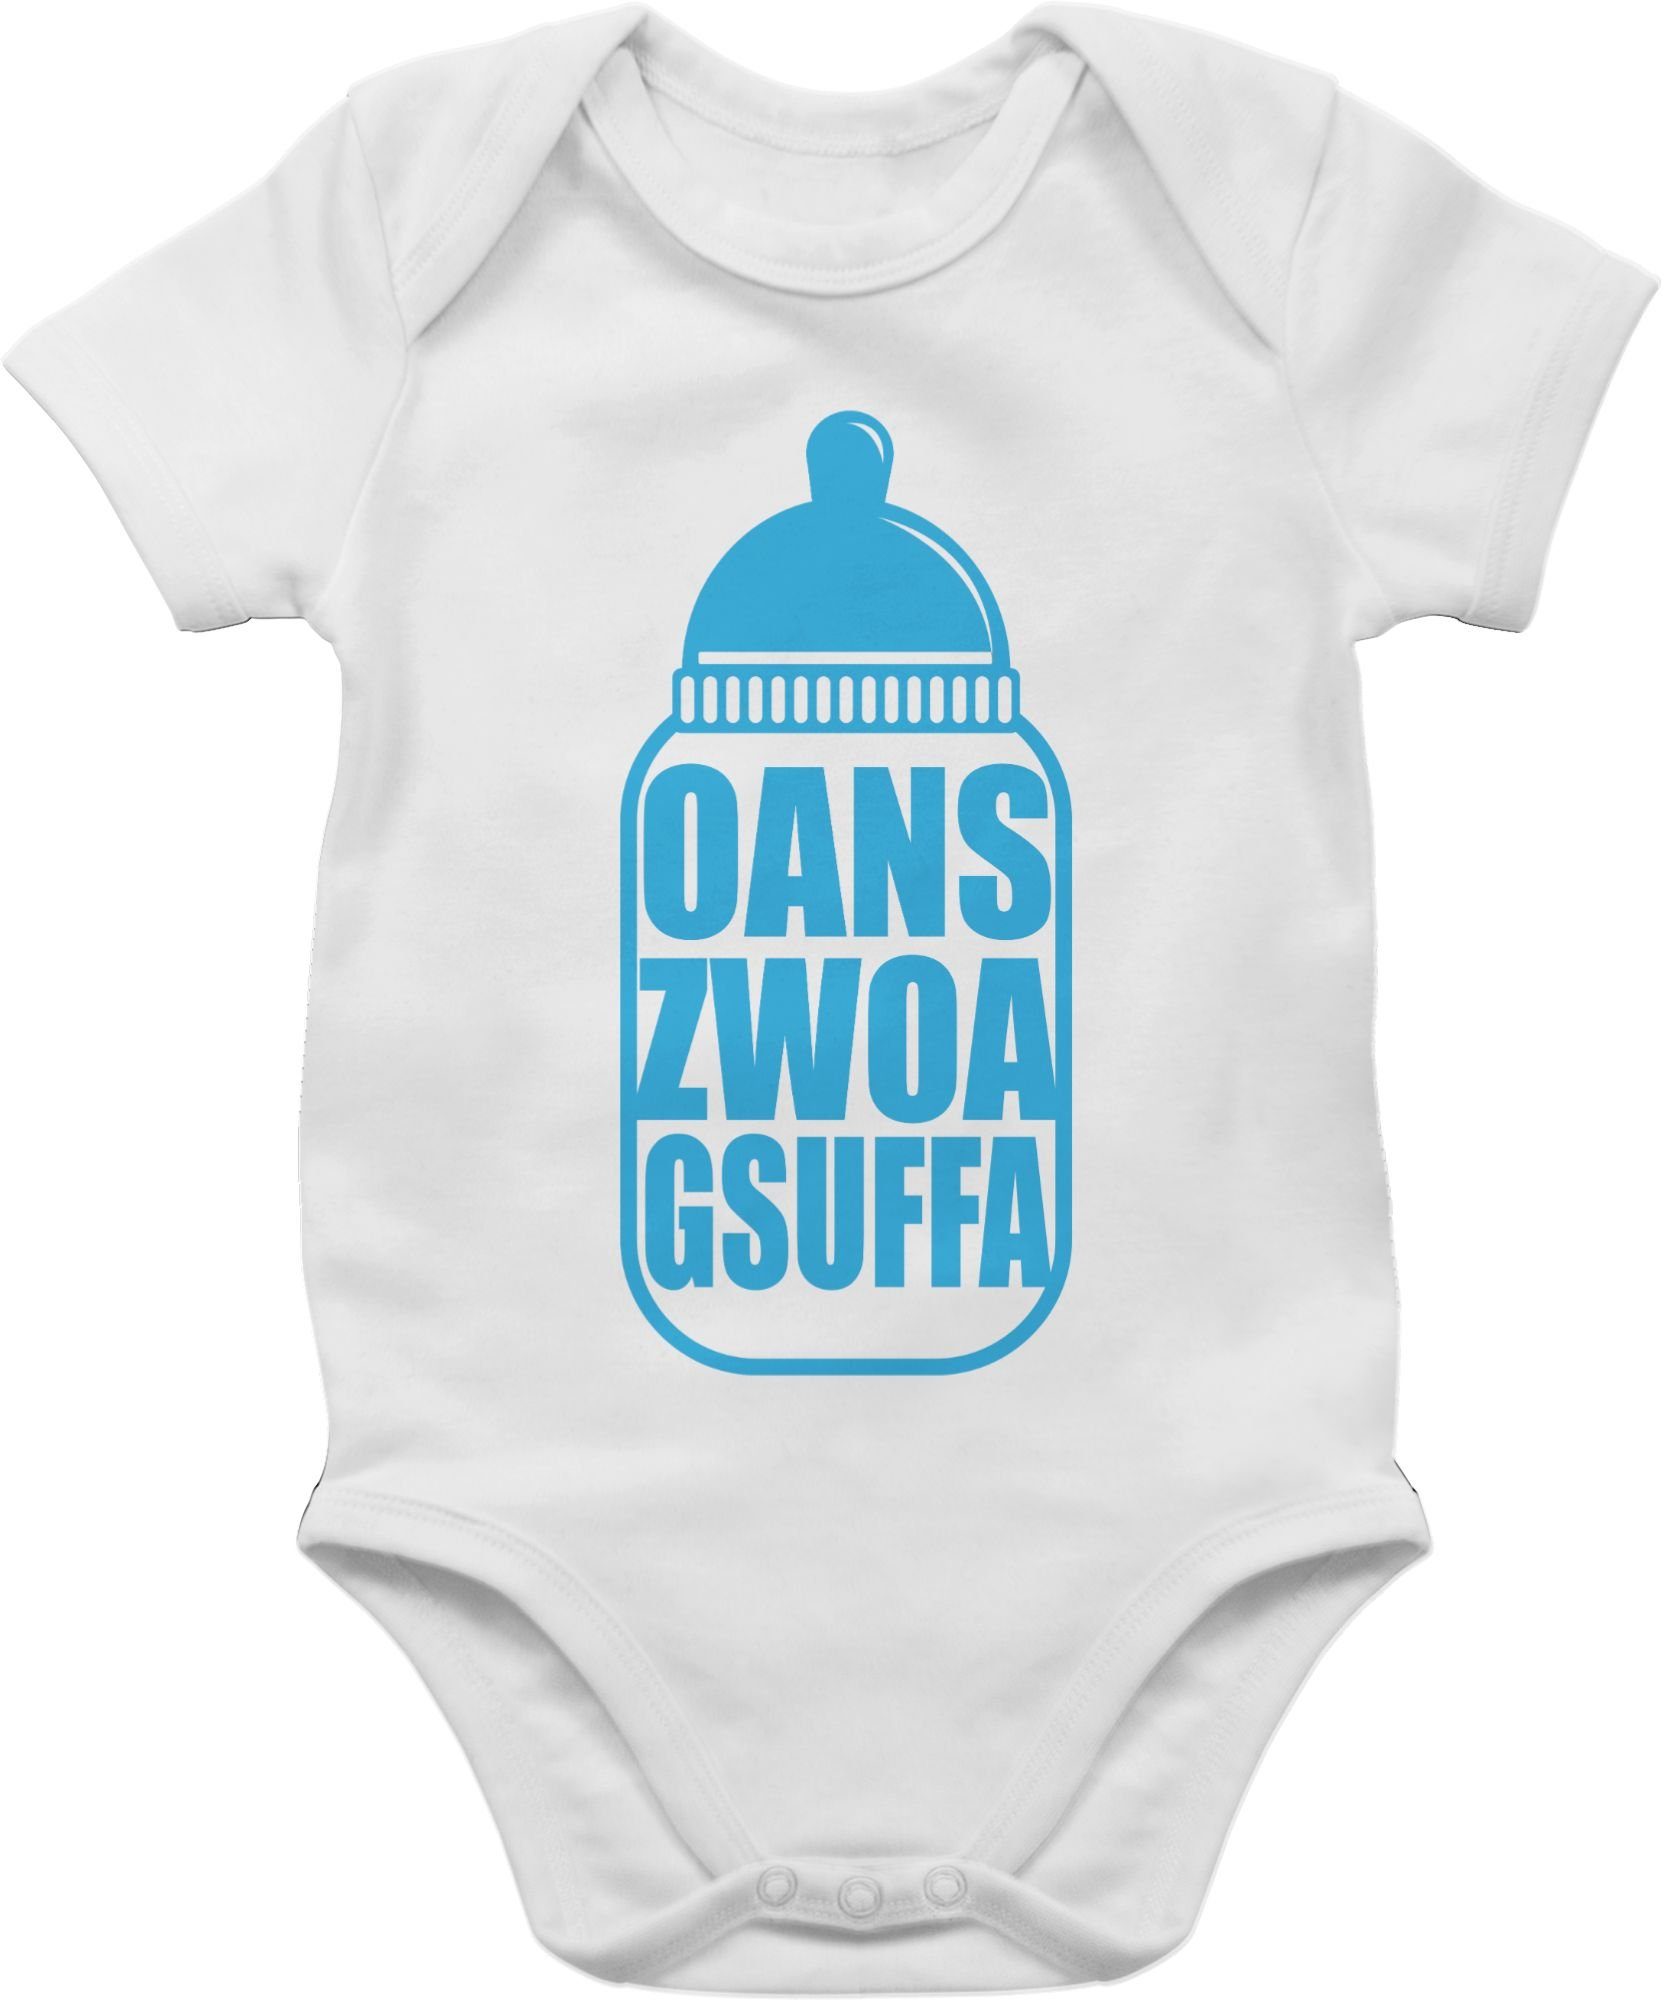 Shirtracer Shirtbody Babyflasche Oans Zwoa Gsuffa blau Mode für Oktoberfest Baby Outfit 1 Weiß | Shirtbodies